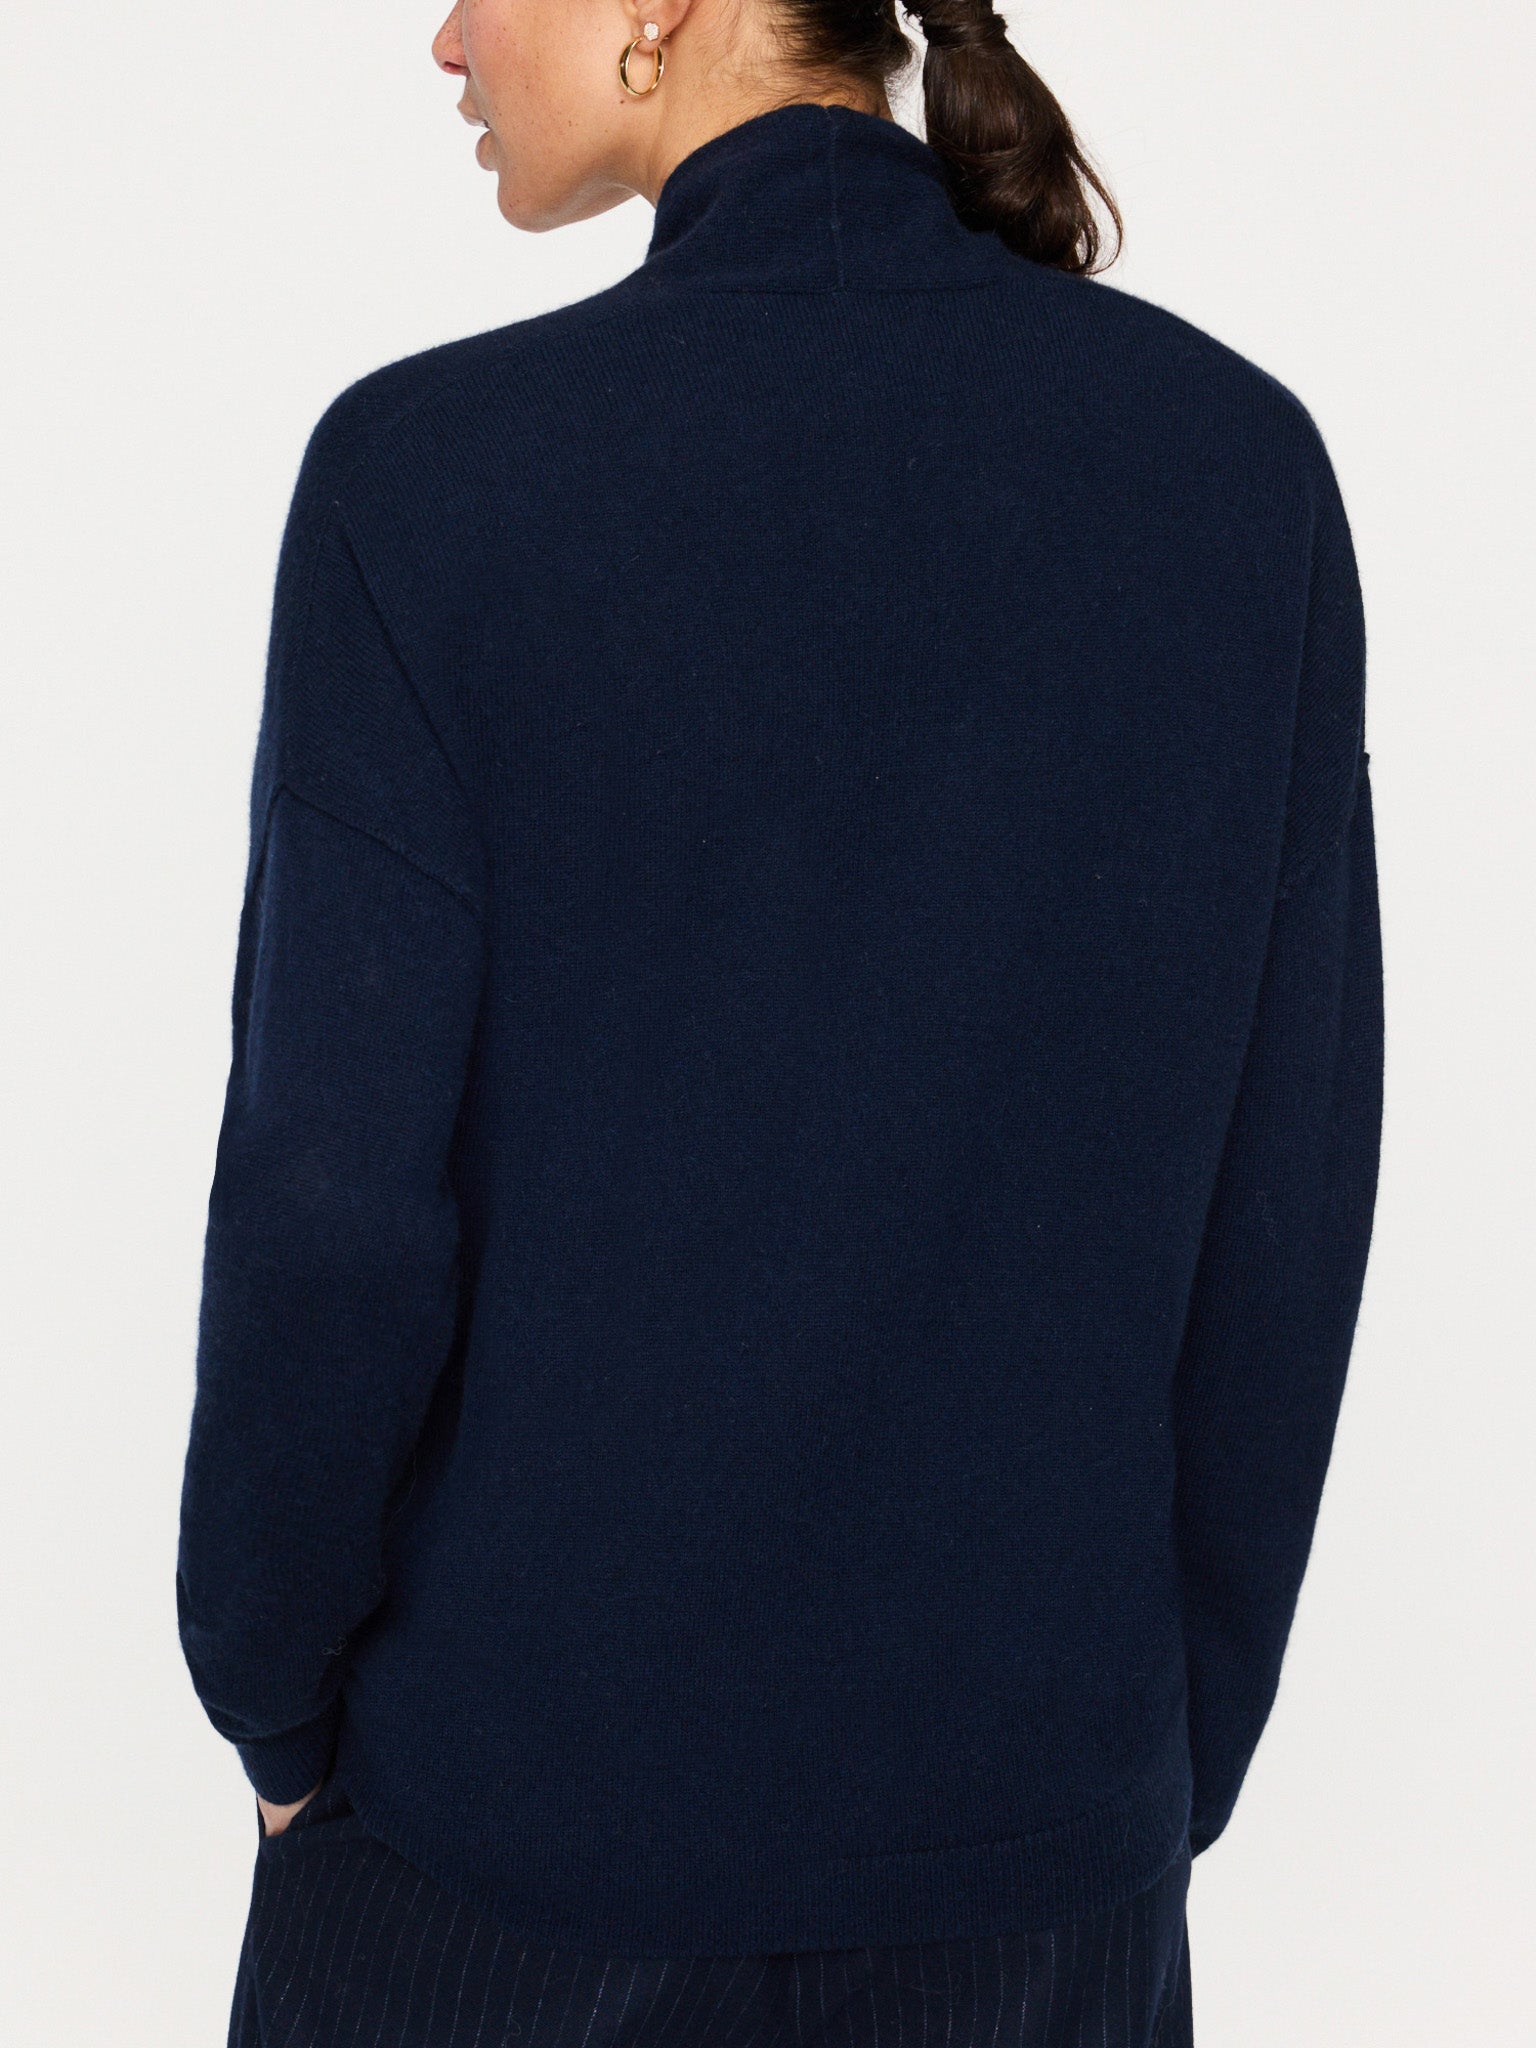 Siena v-neck pullover navy sweater back view